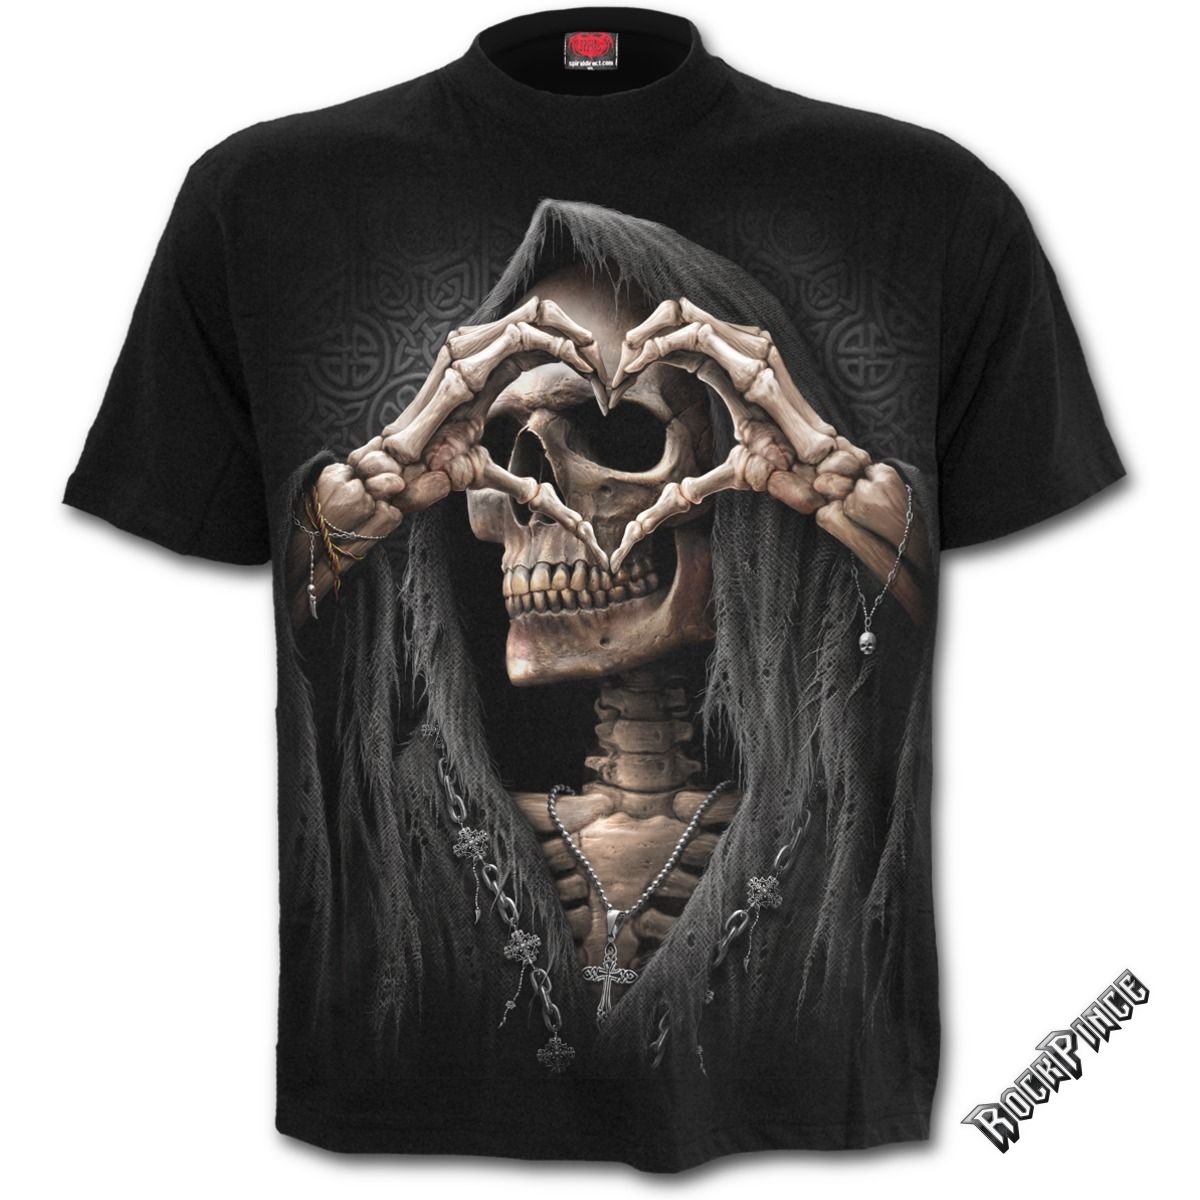 DARK LOVE - T-Shirt Black - T147M101